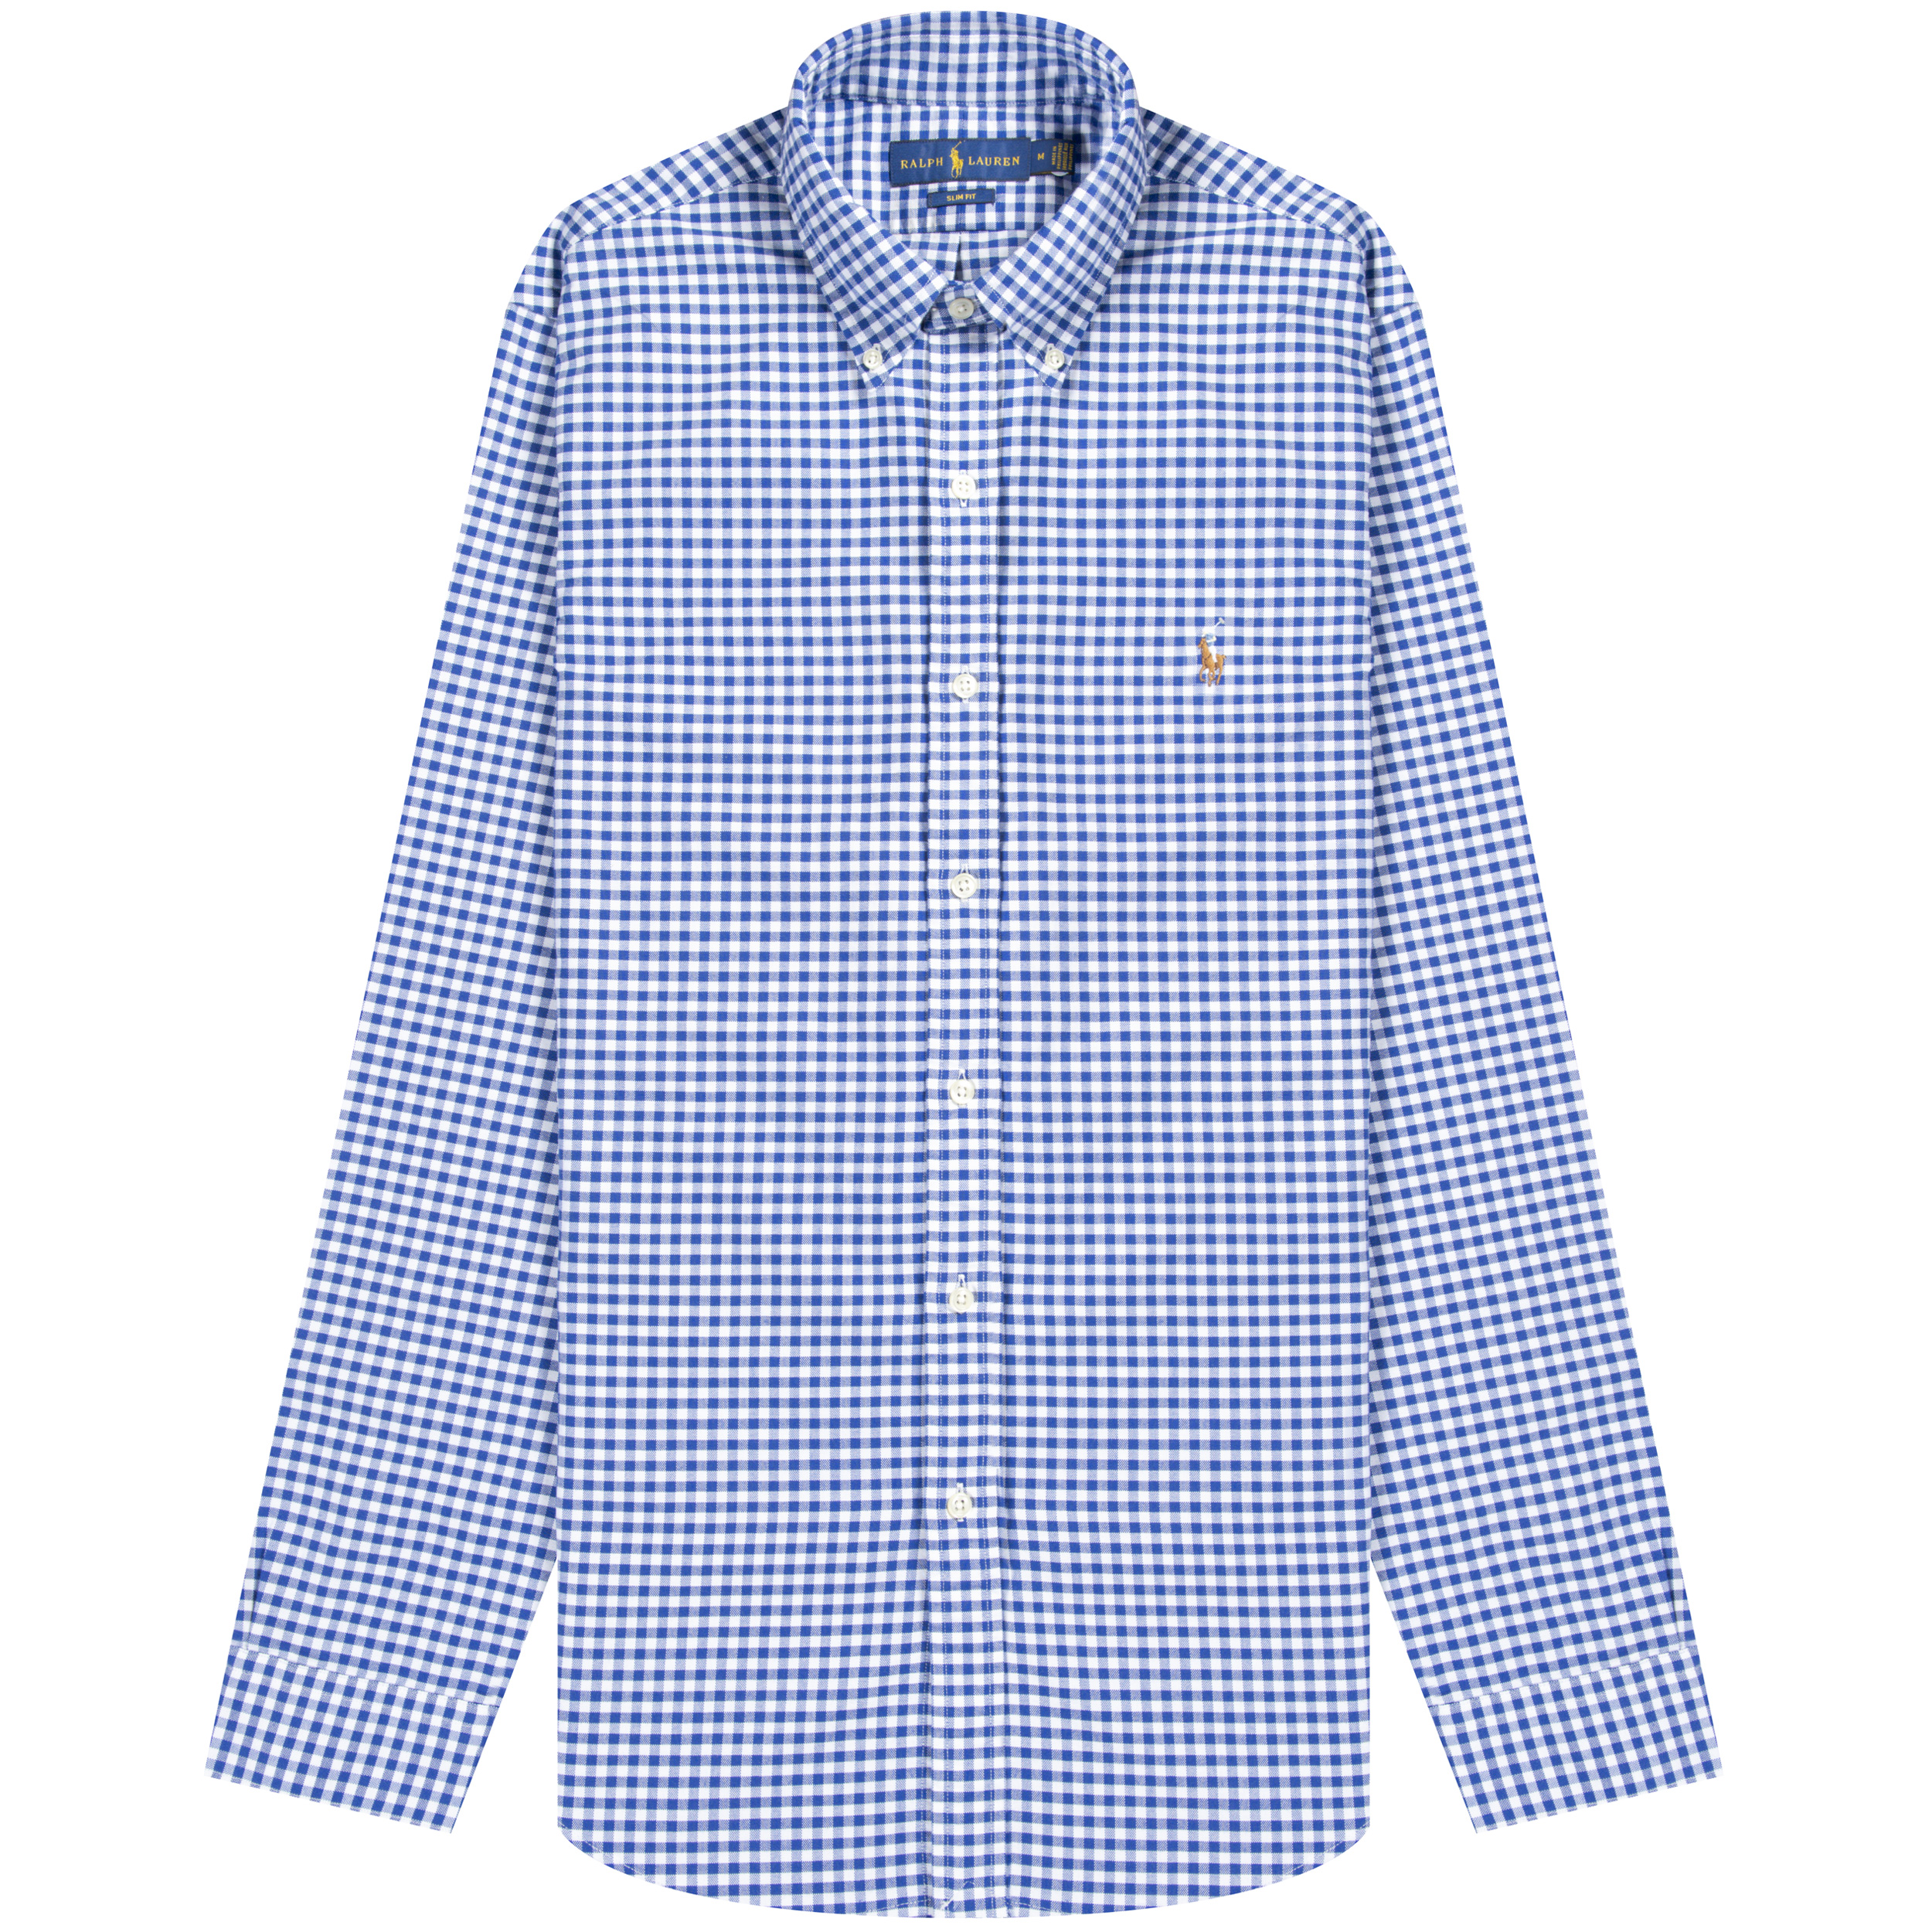 Polo Ralph Lauren ’Slim Fit’ Gingham Oxford Shirt Blue/White